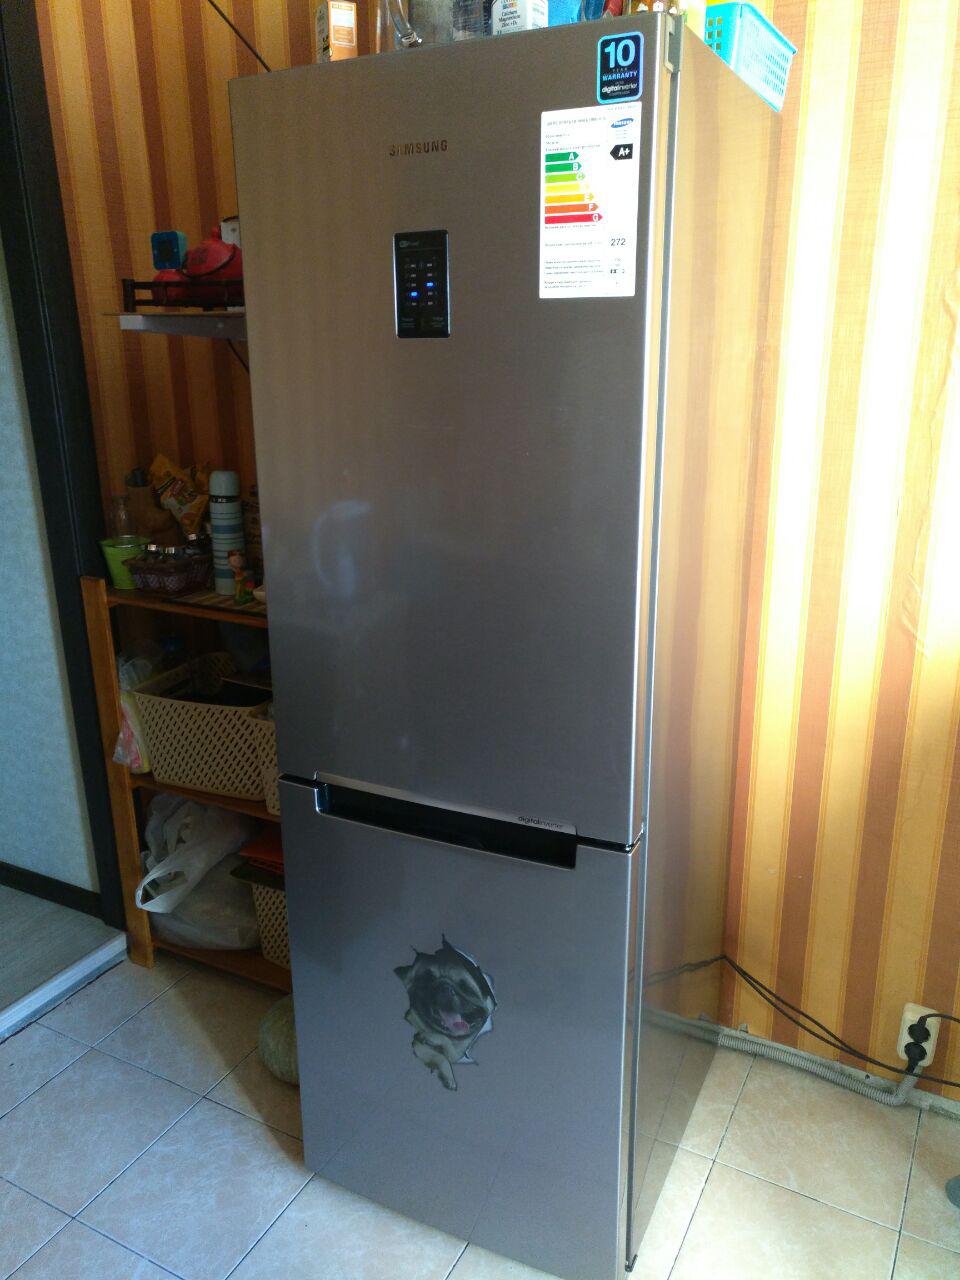 Samsung ноу Фрост холодильник